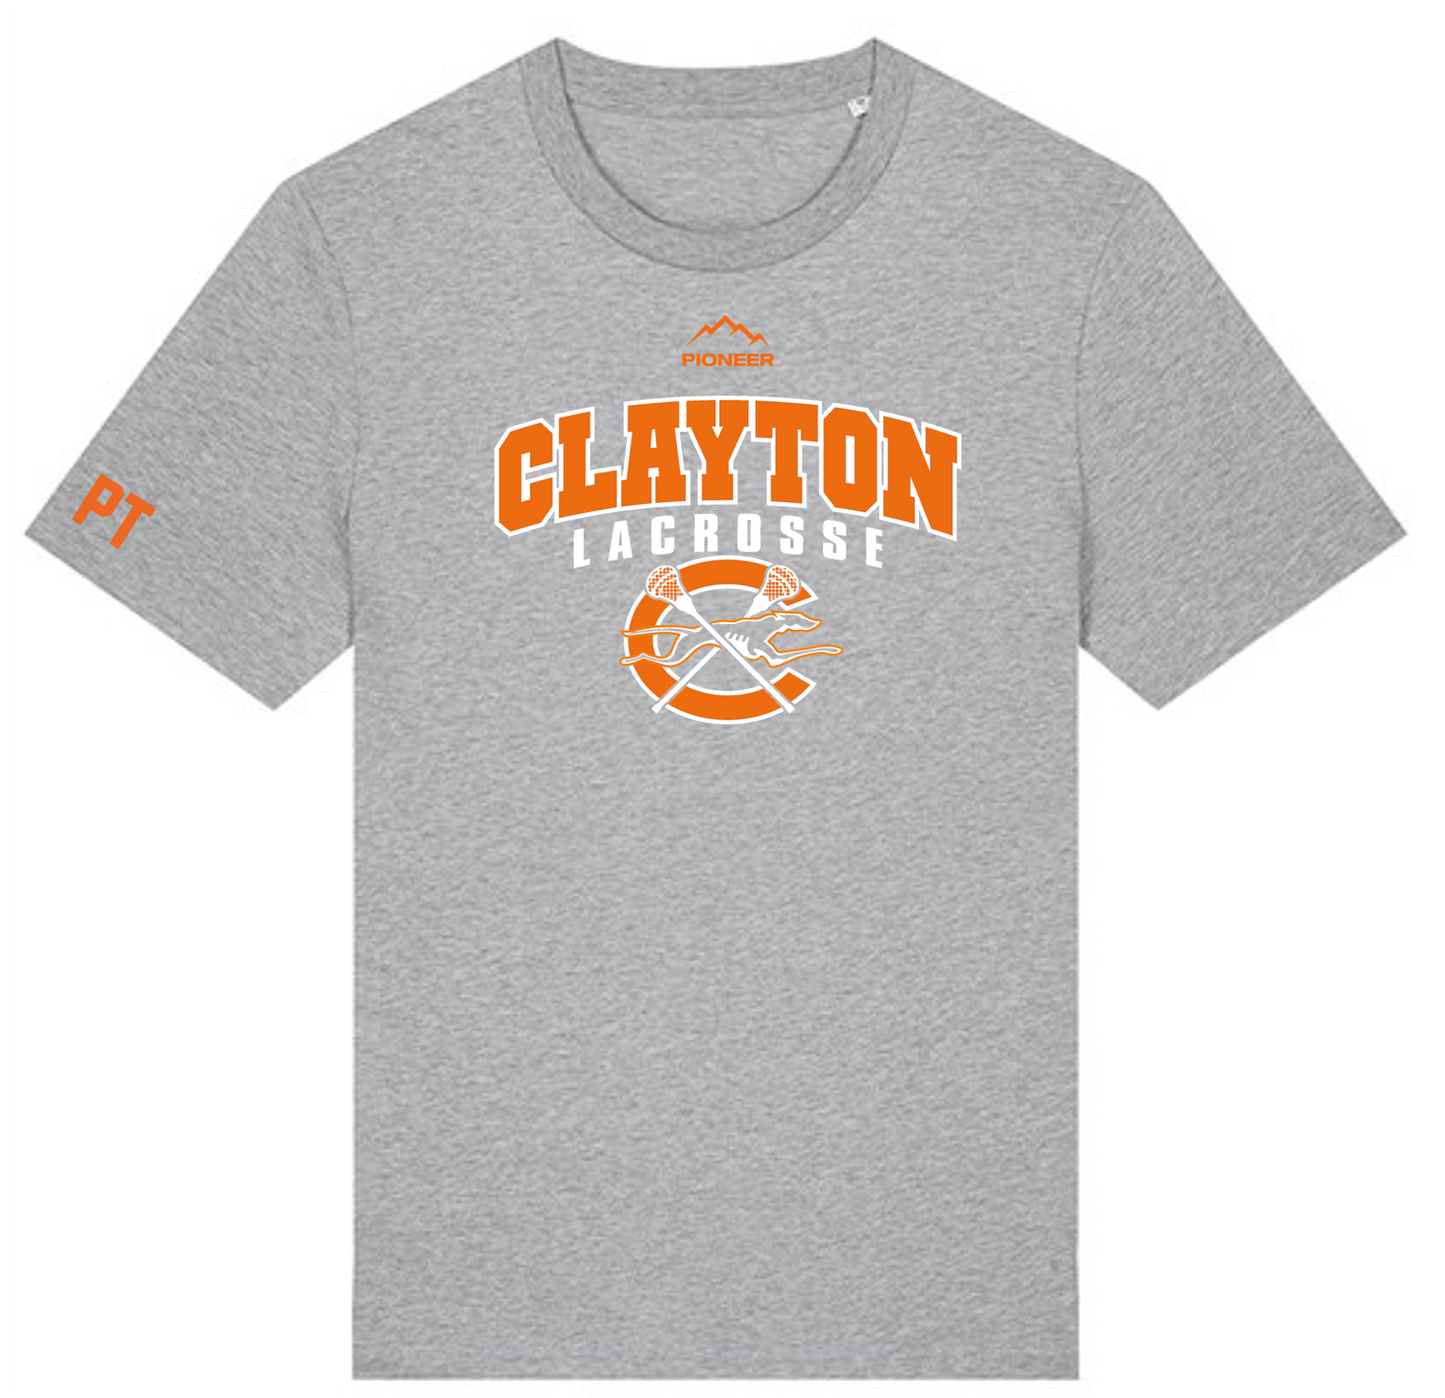 Clayton Lacrosse Organic Cotton T-Shirt